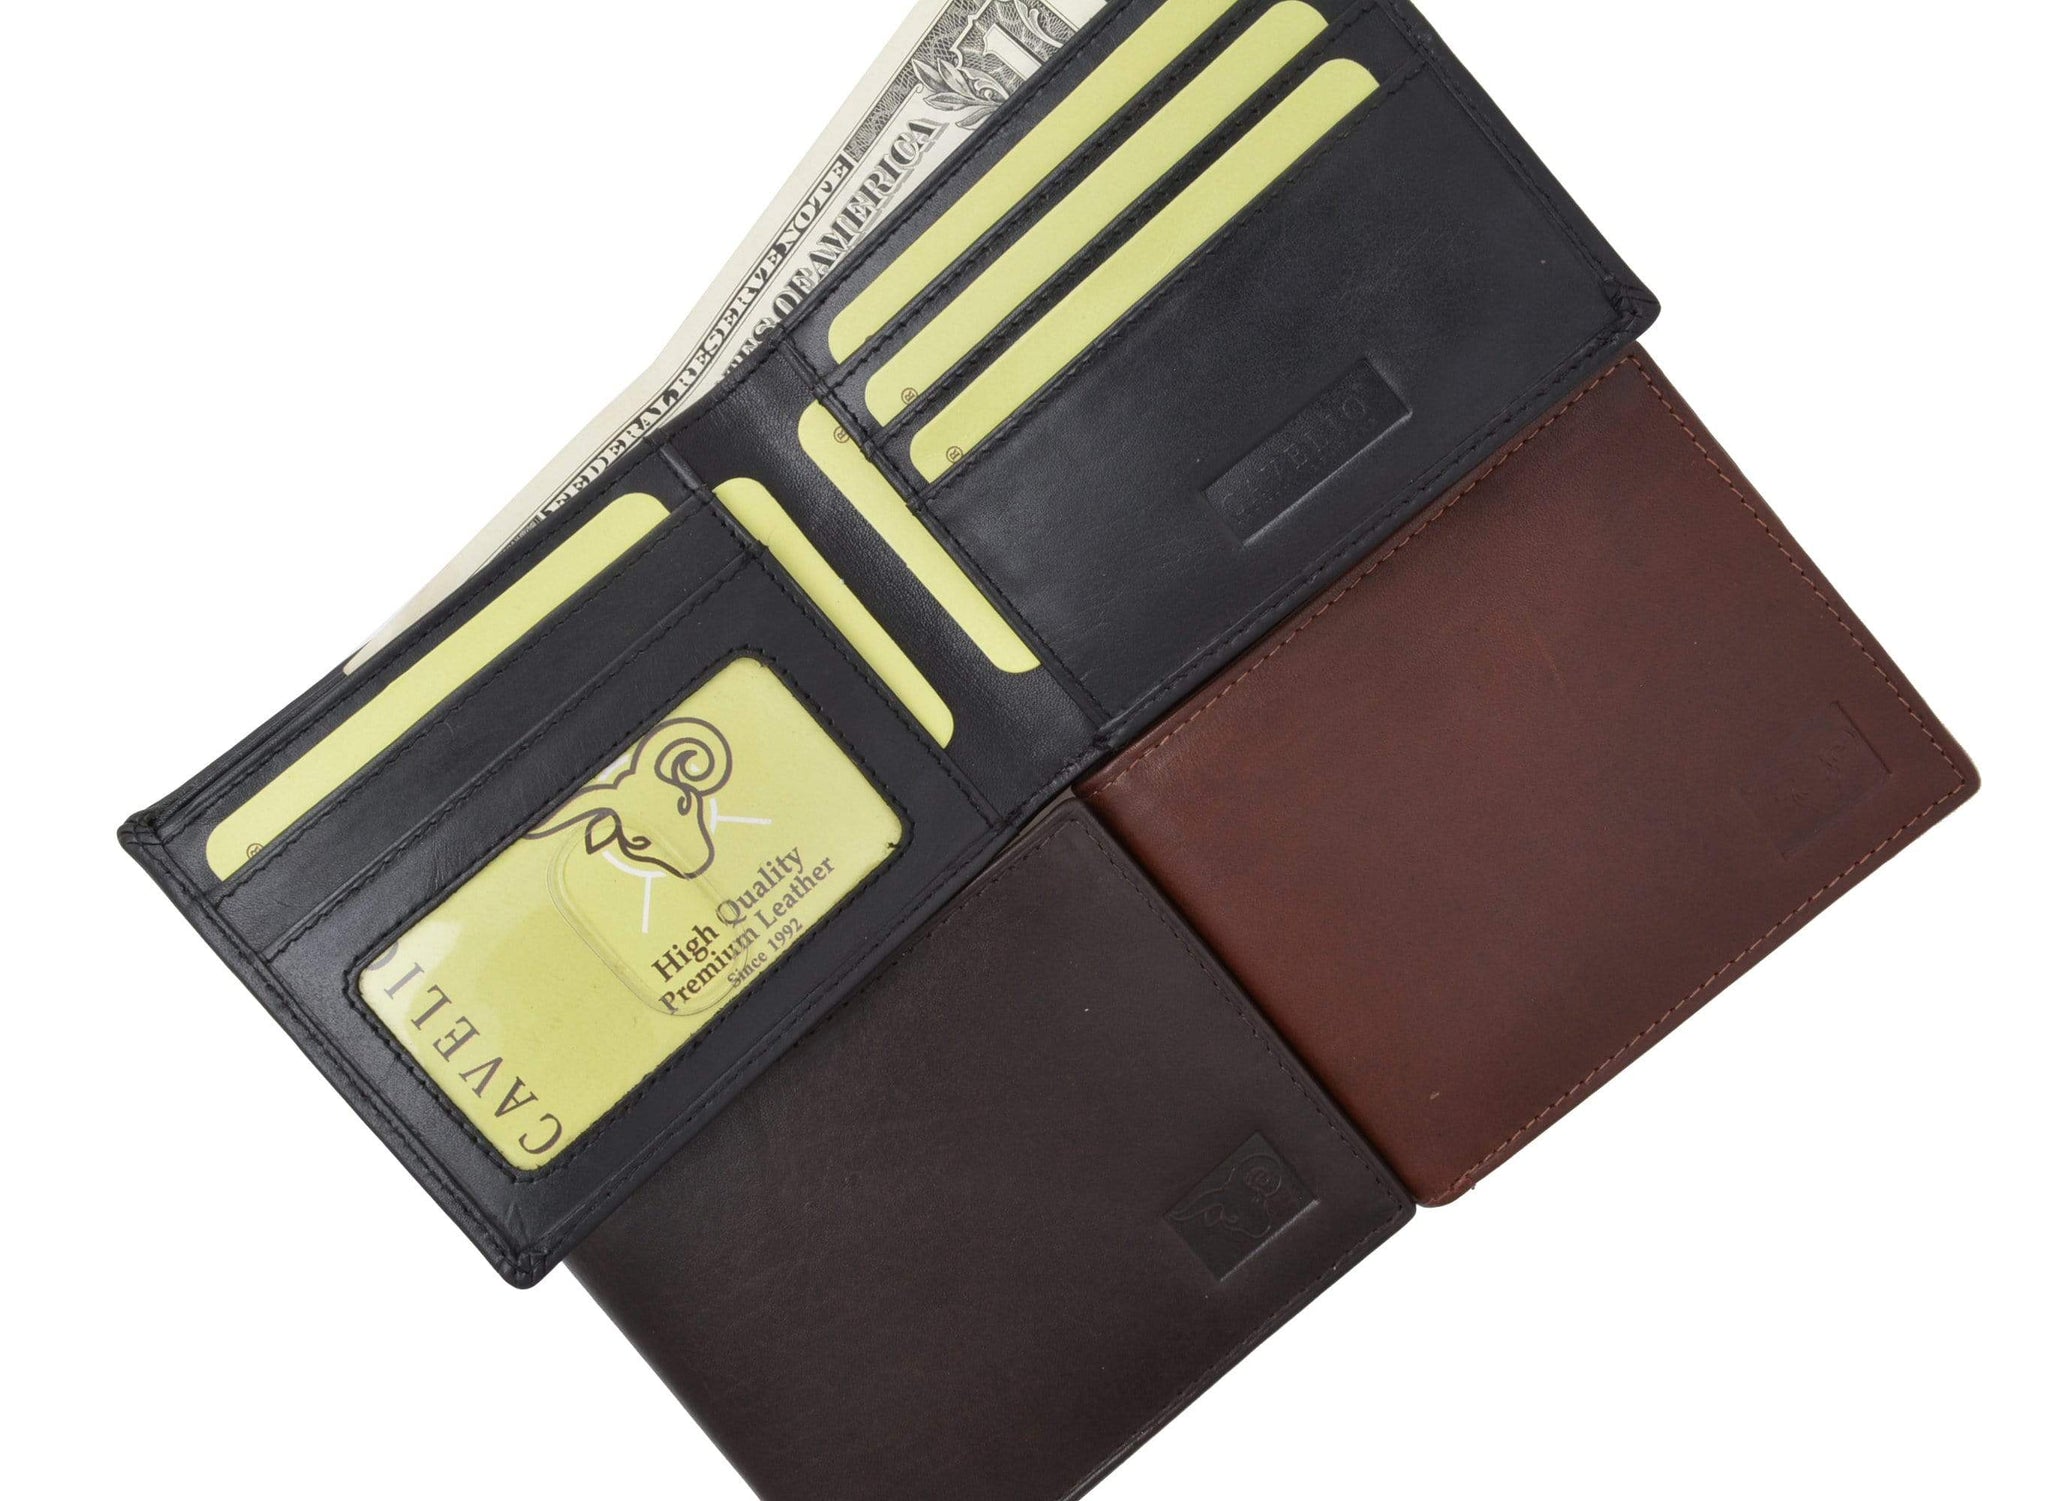  Men's Genuine Leather Wallet - Slim Bifold with